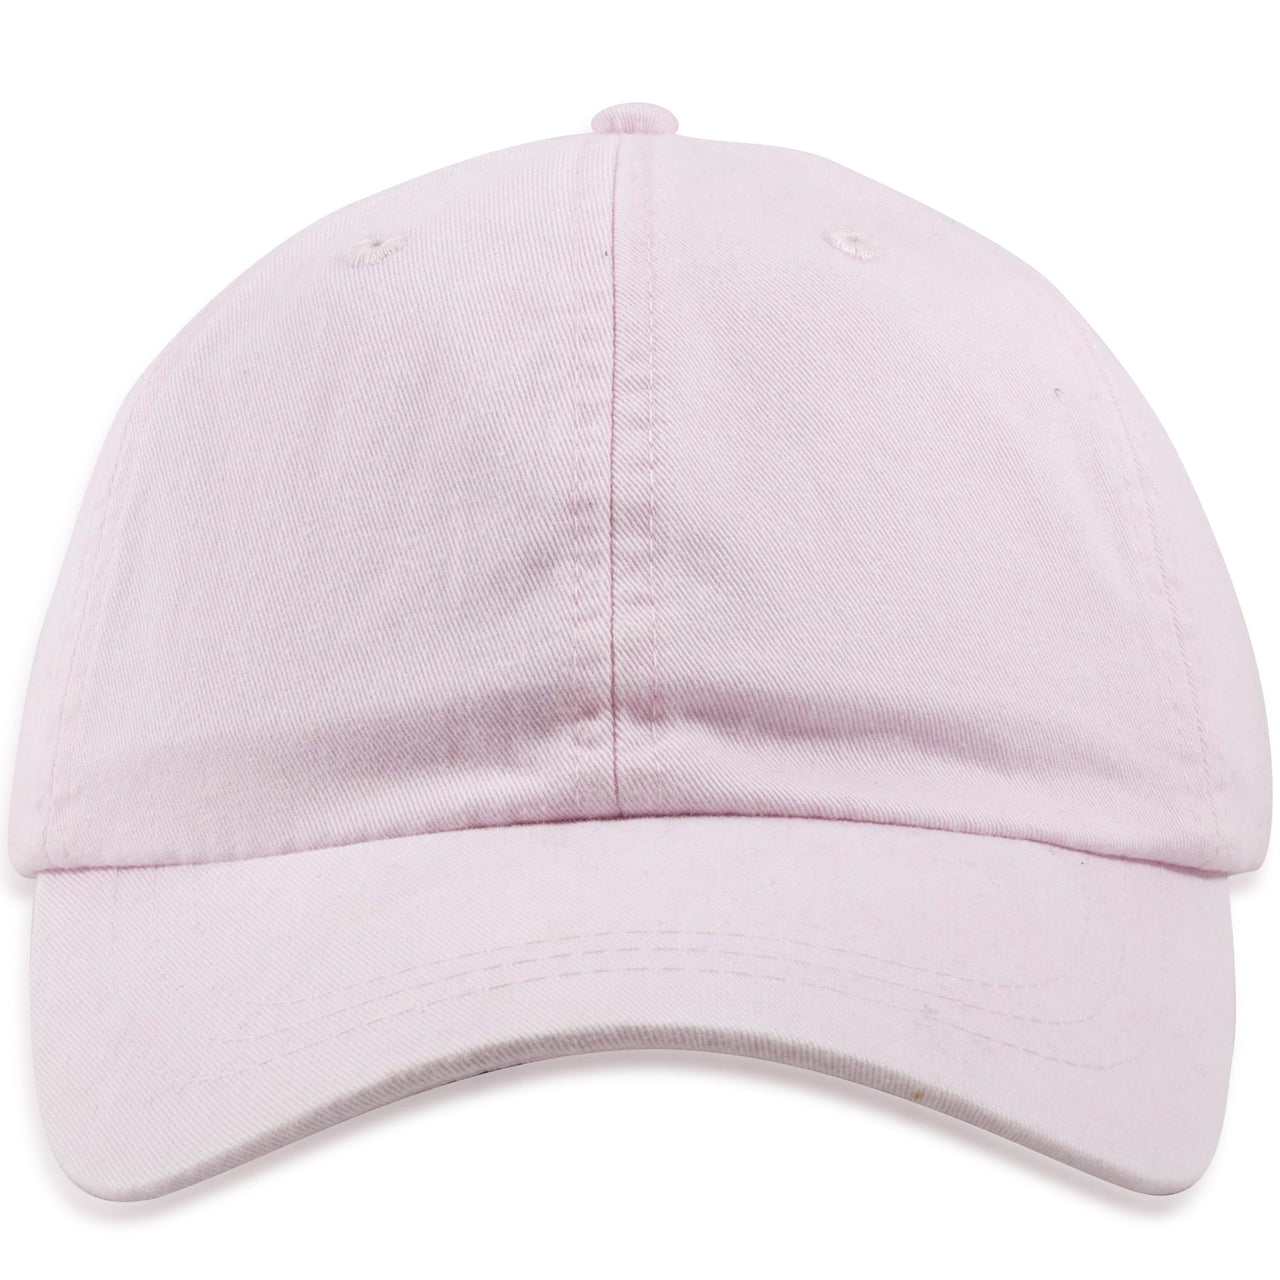 Pale Pink Blank Adjustable Cotton Baseball Cap